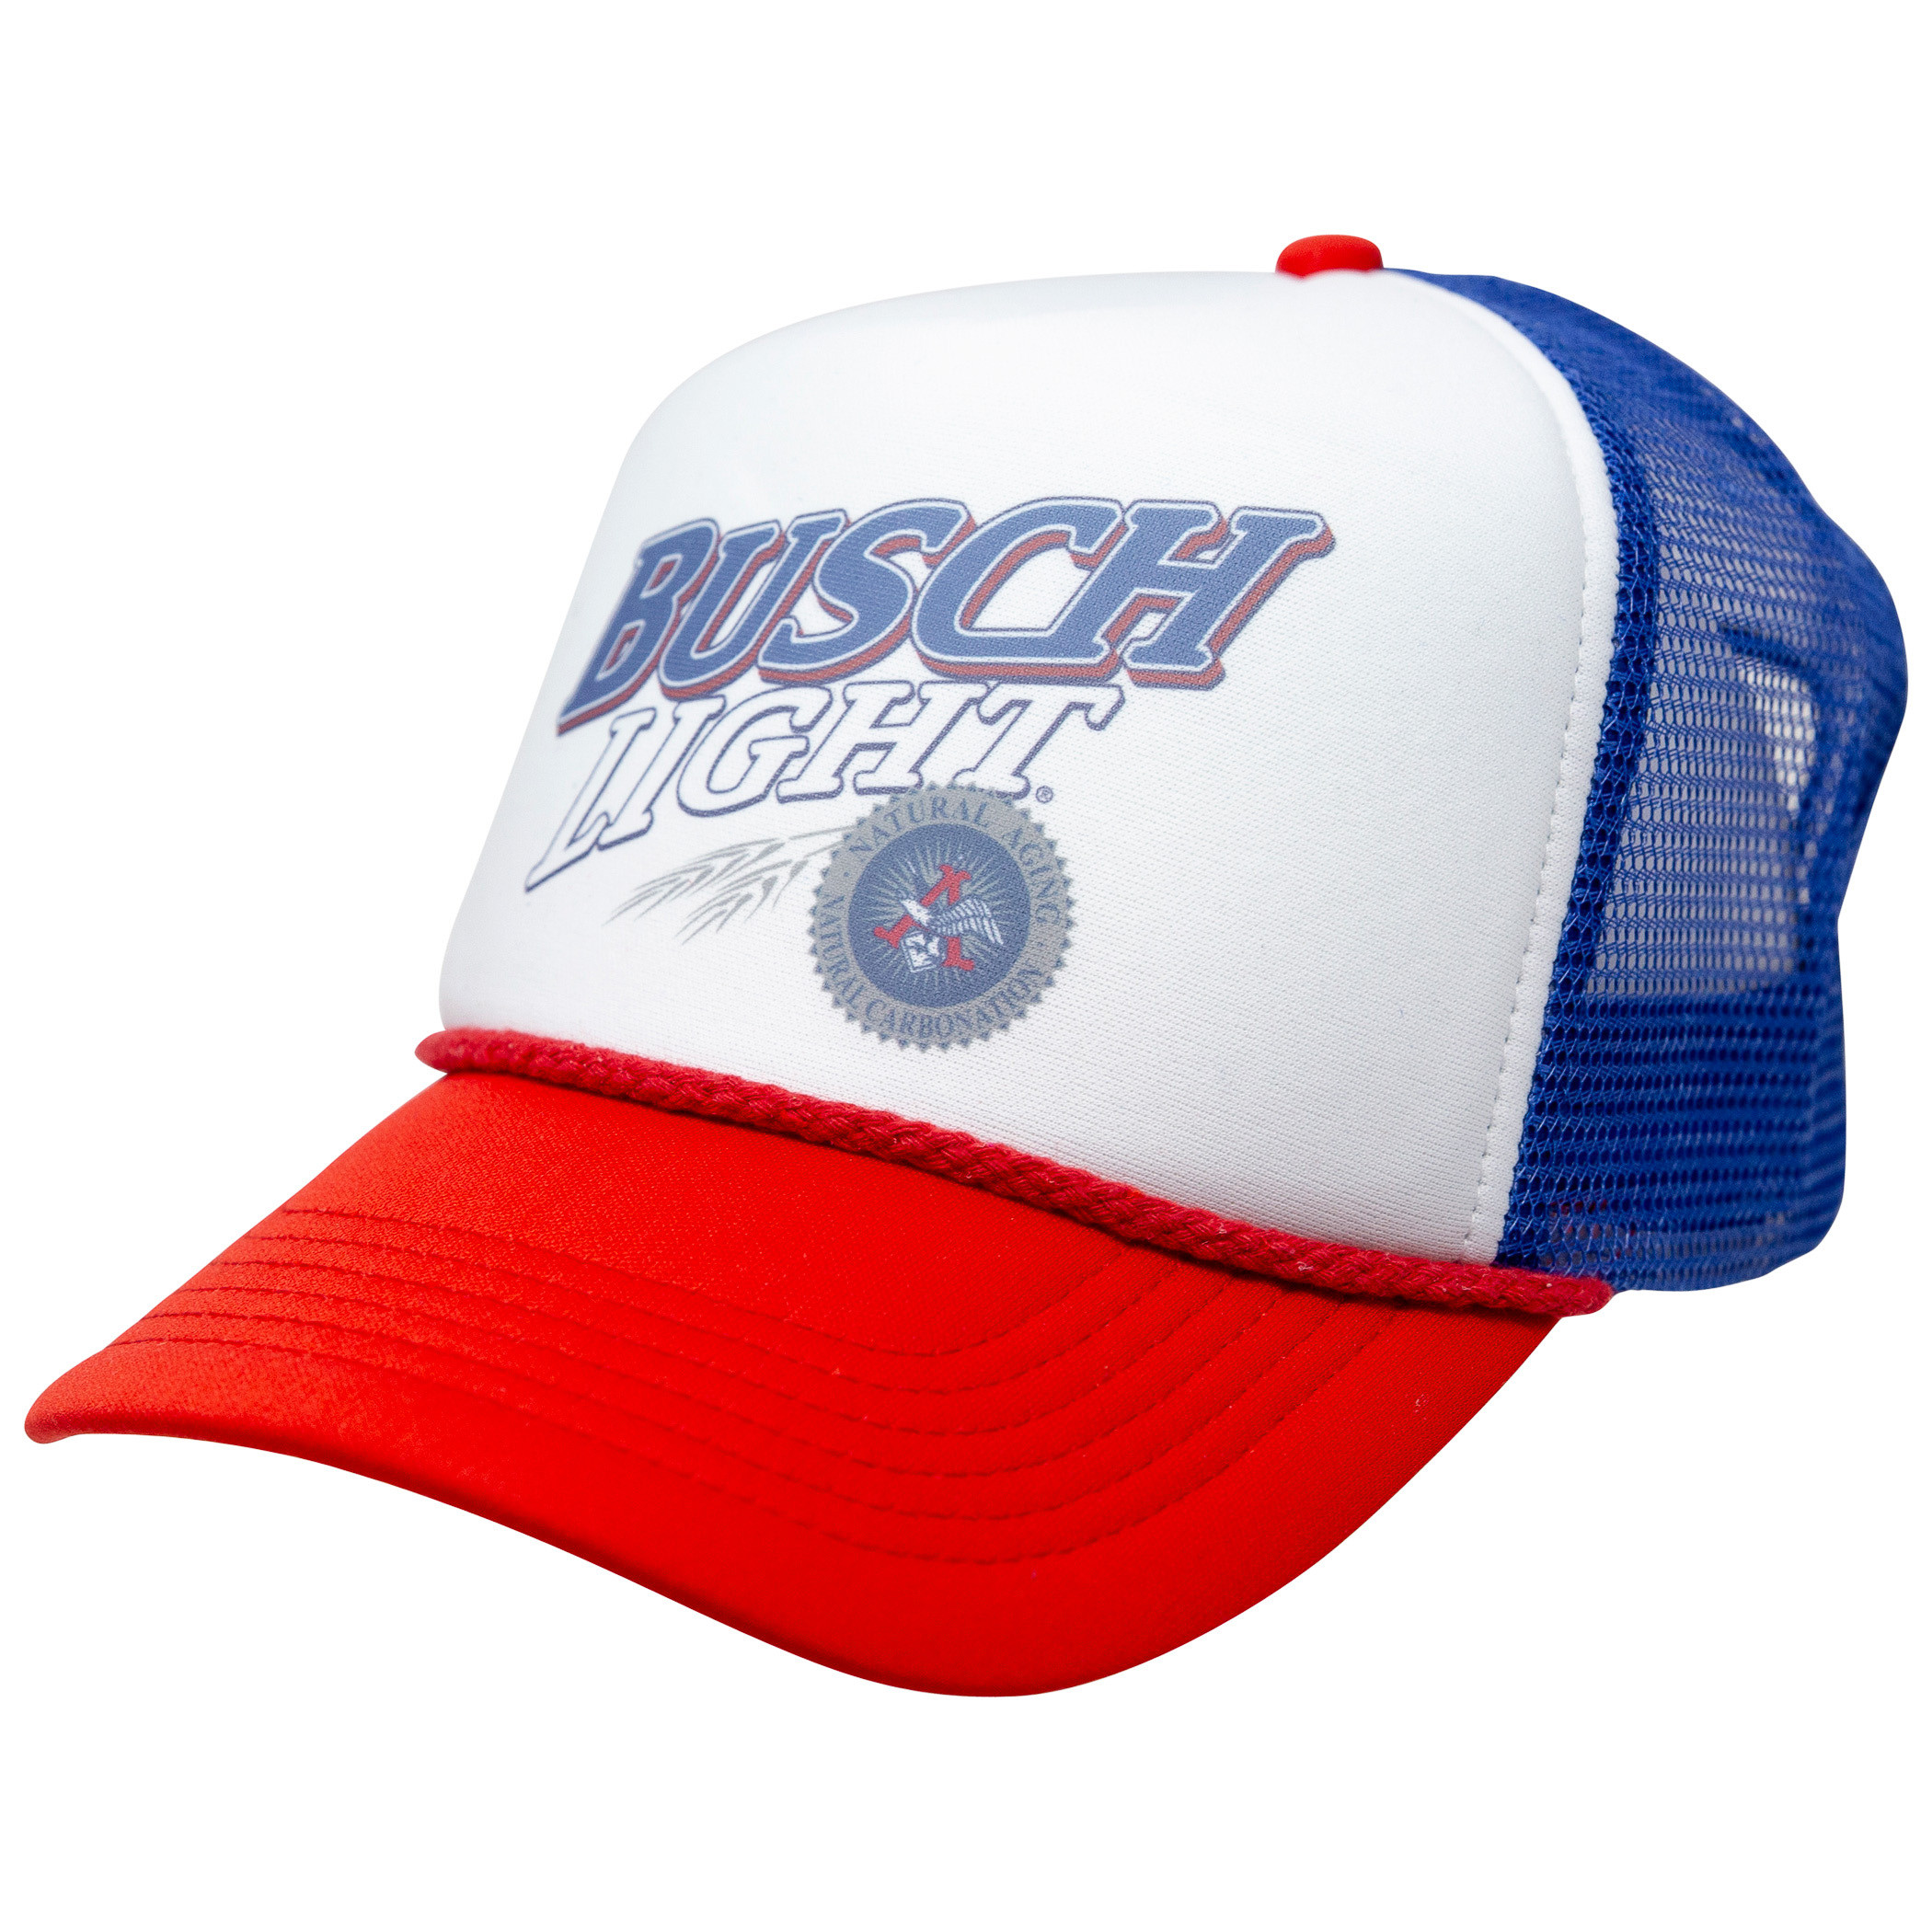 Busch Light Beer Logo Red, White, and Blue Adjustable Snapback Mesh Trucker Hat